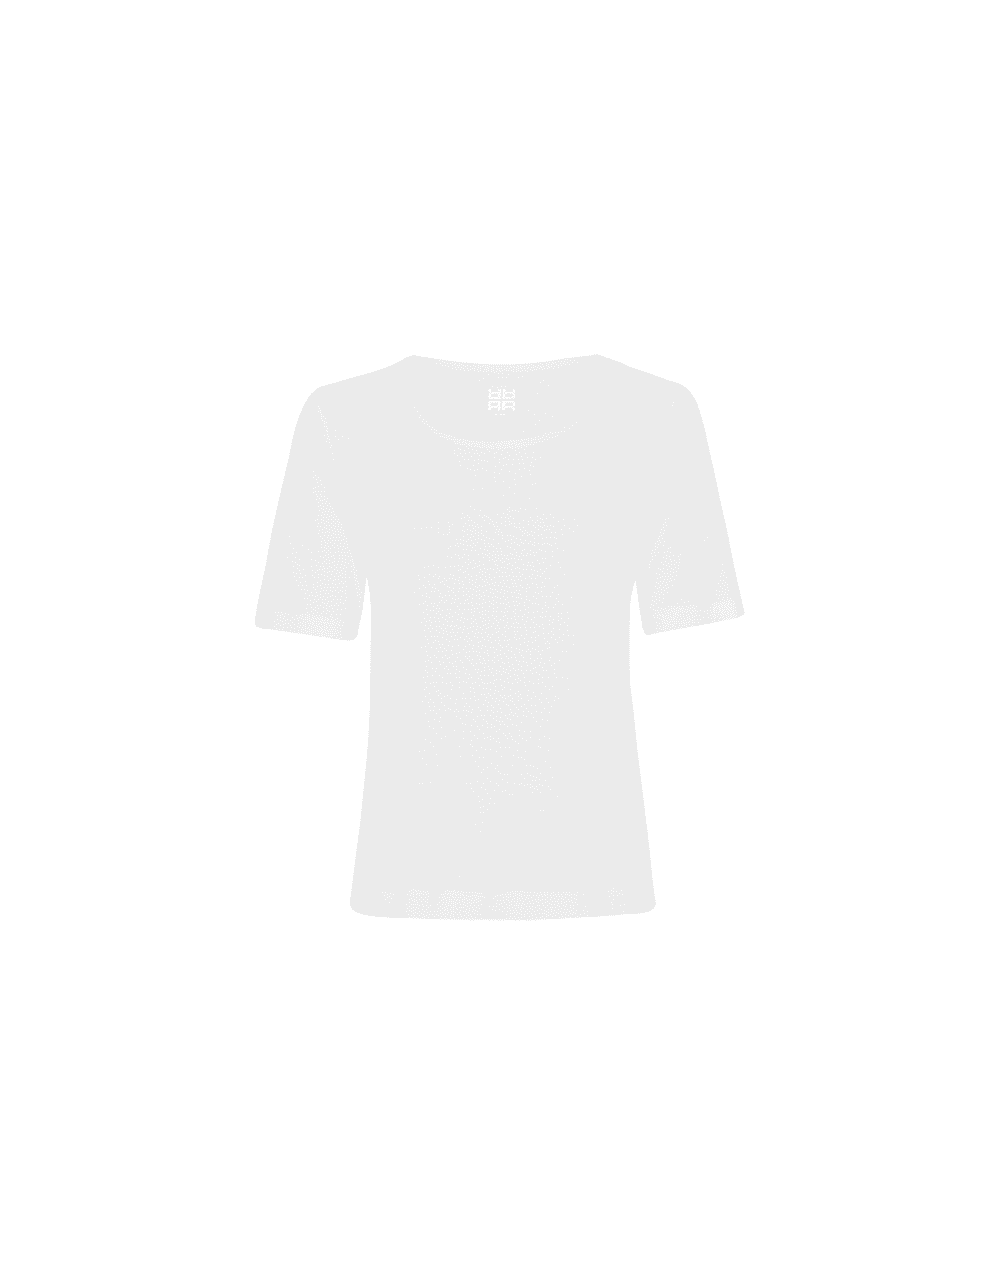 Riani Riani Classic Sleeved T-shirt Col: 421 Dark Navy, Size: 14